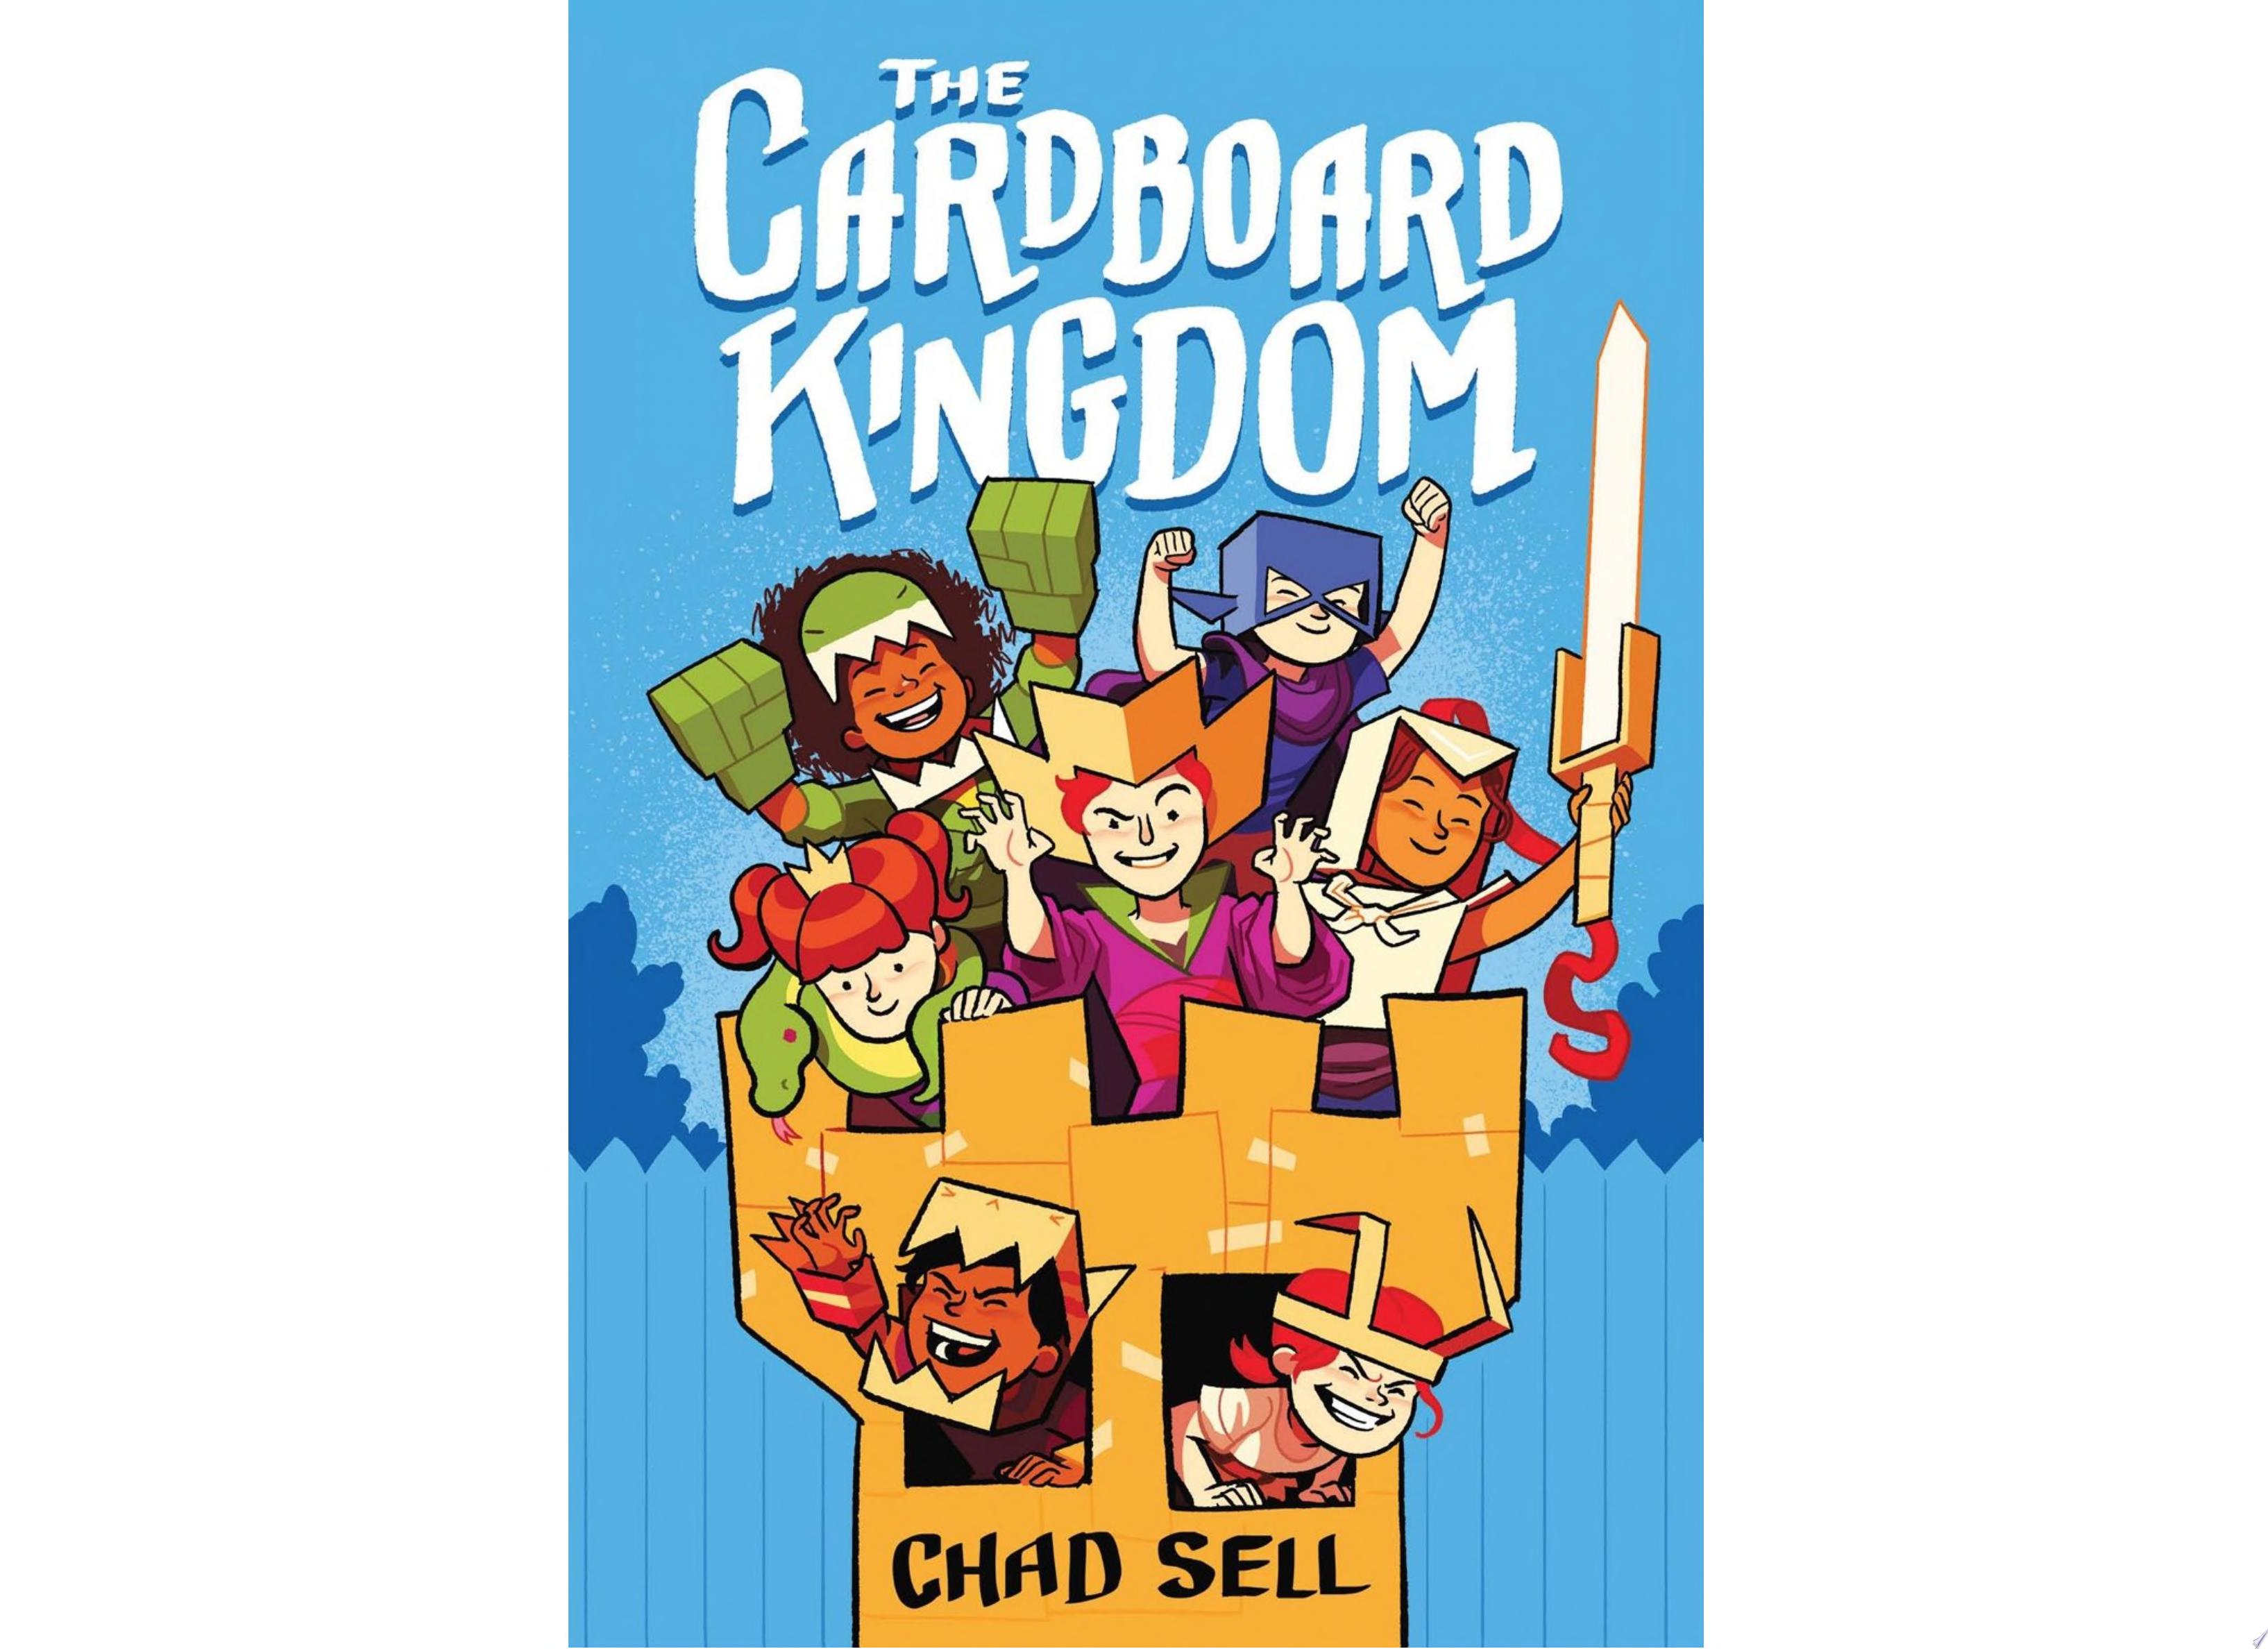 Image for "The Cardboard Kingdom"